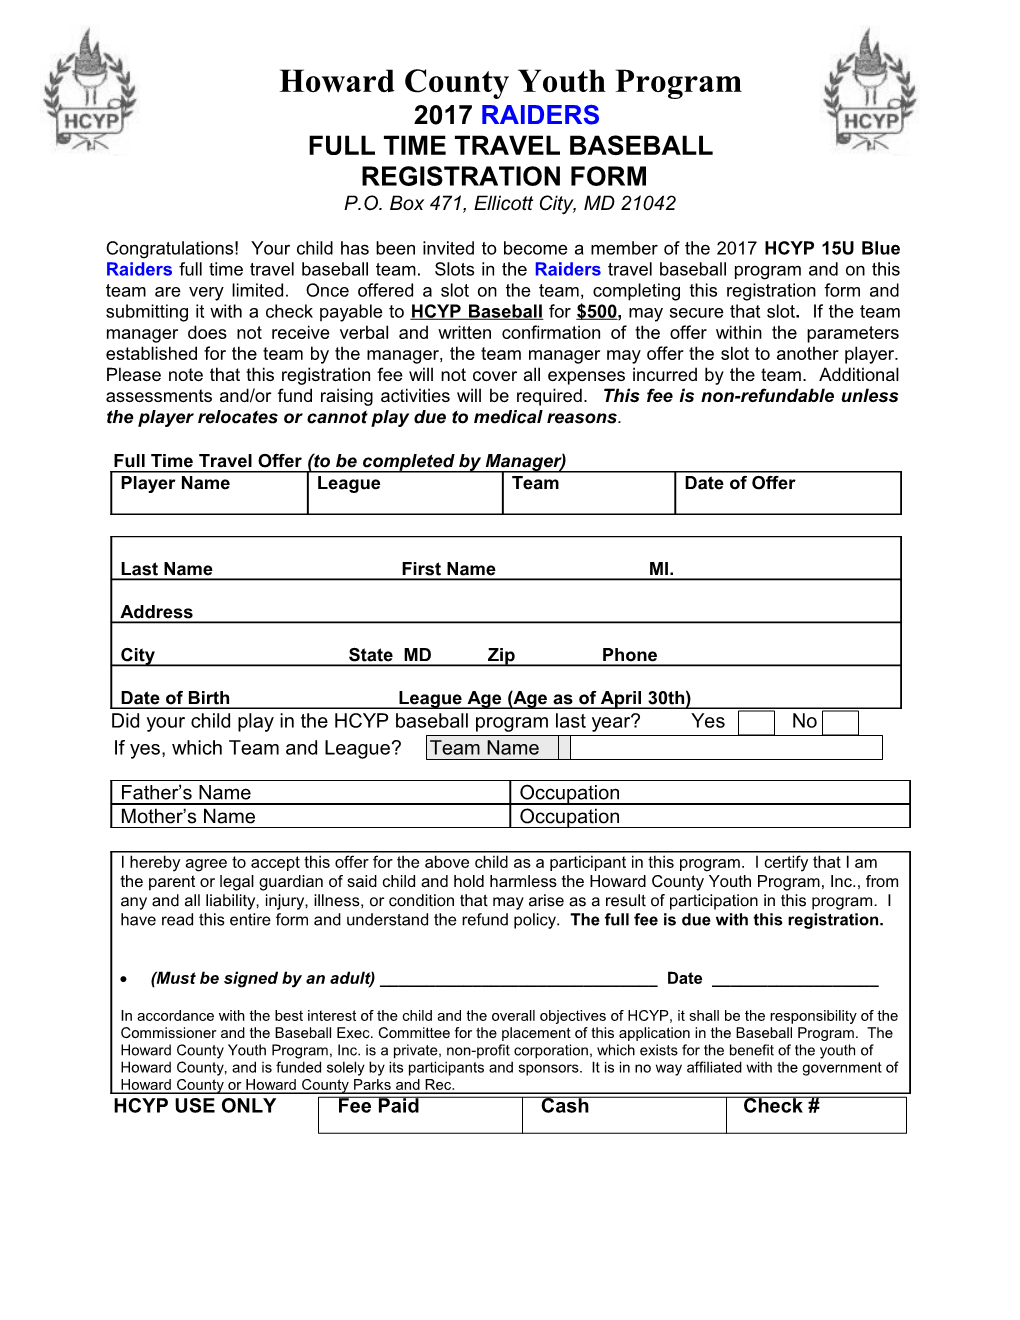 Howard County Youth Program F/T Travel Registration Form